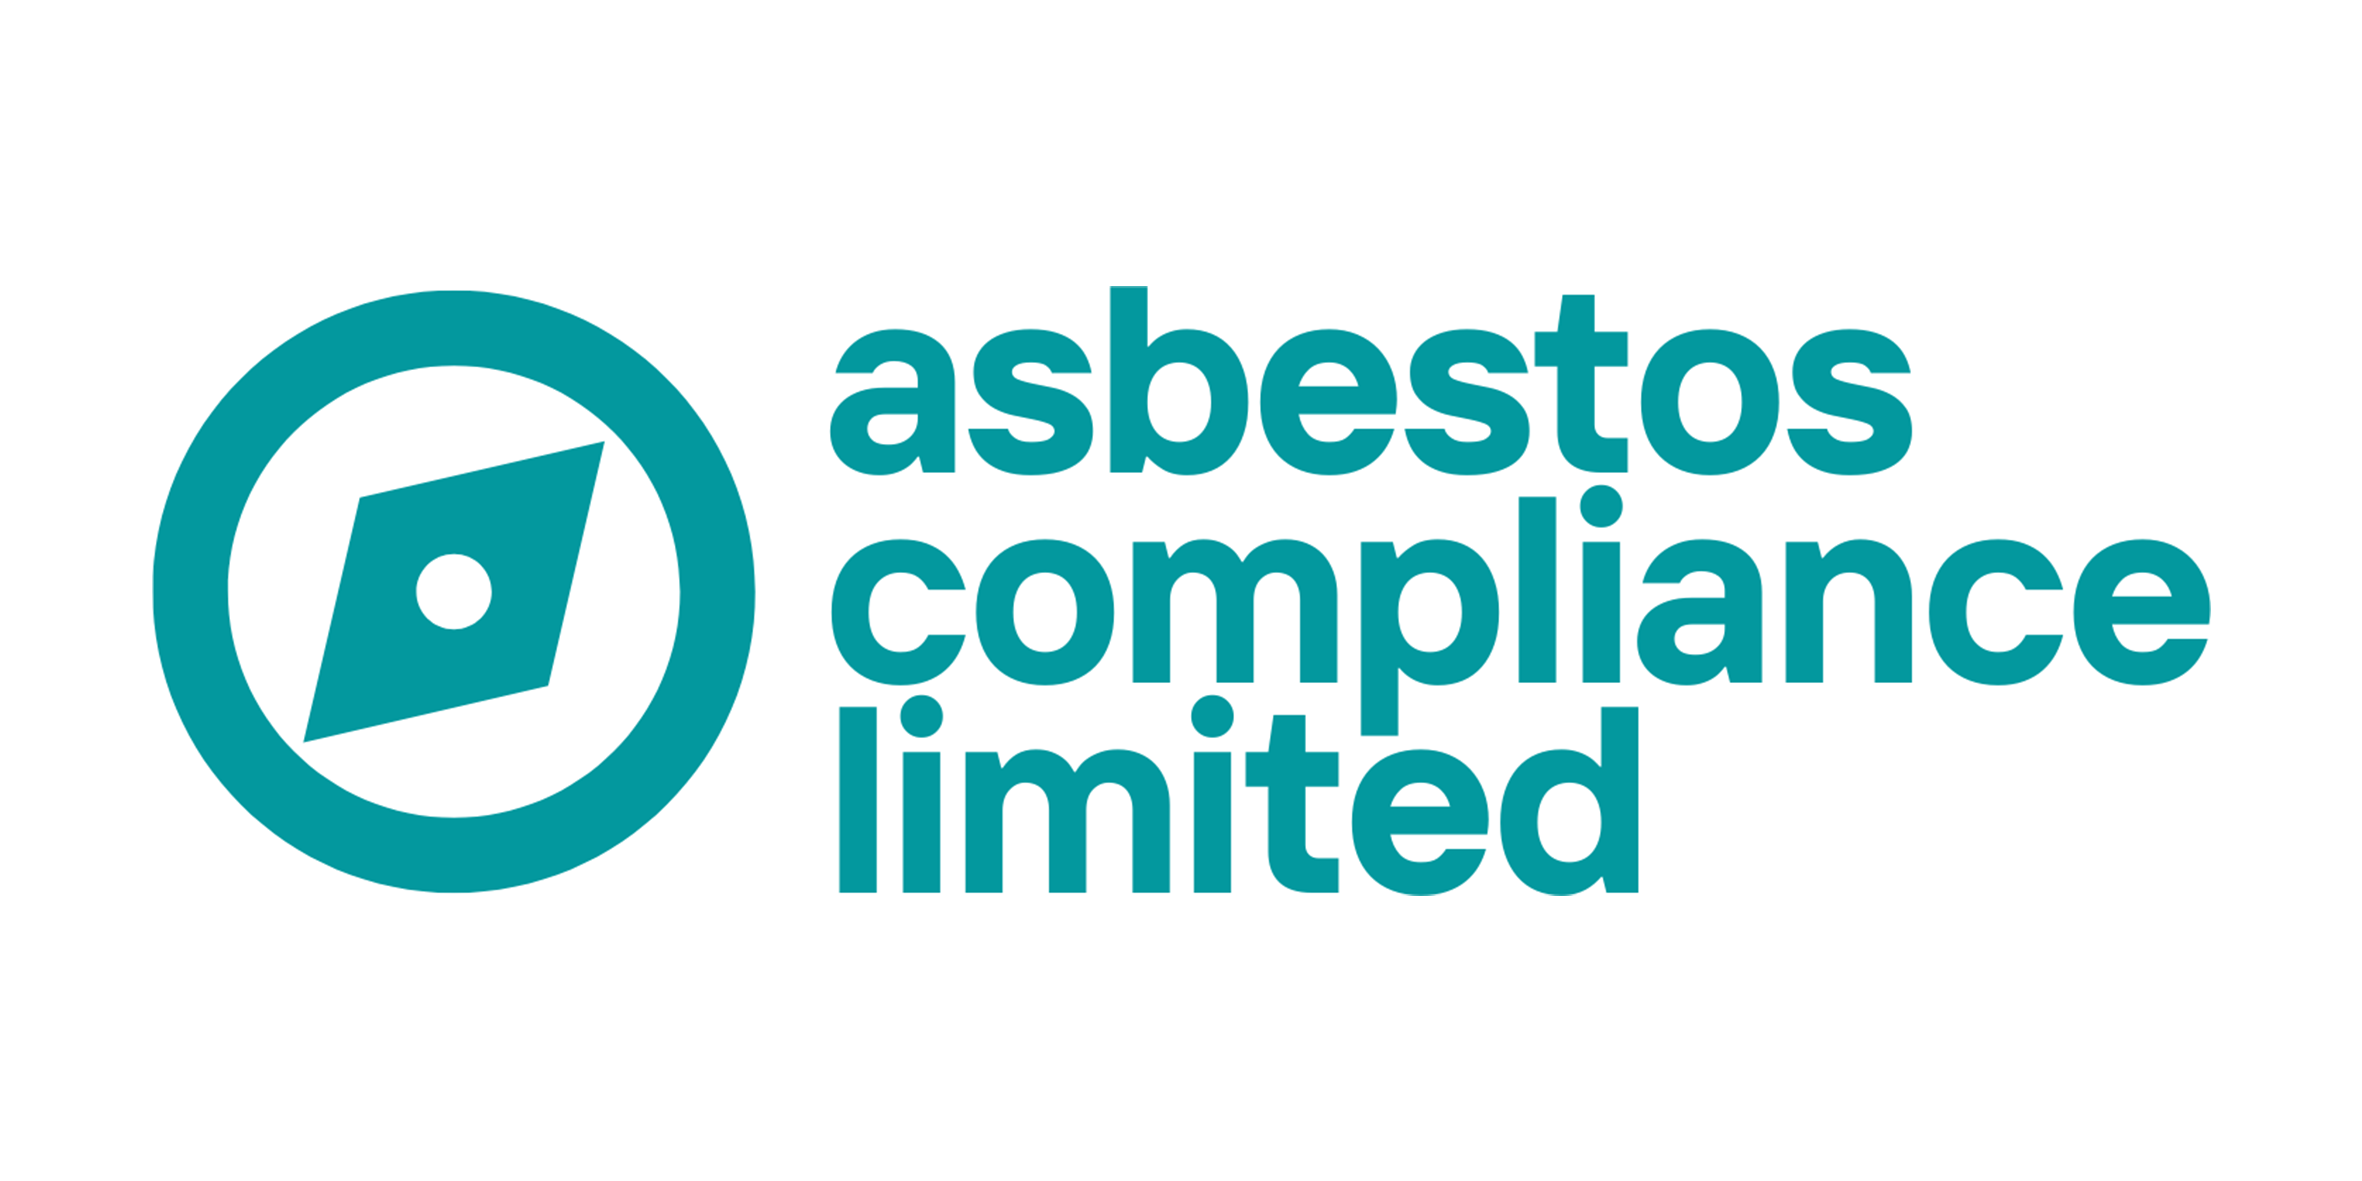 asbestos_compliance_limited_logo